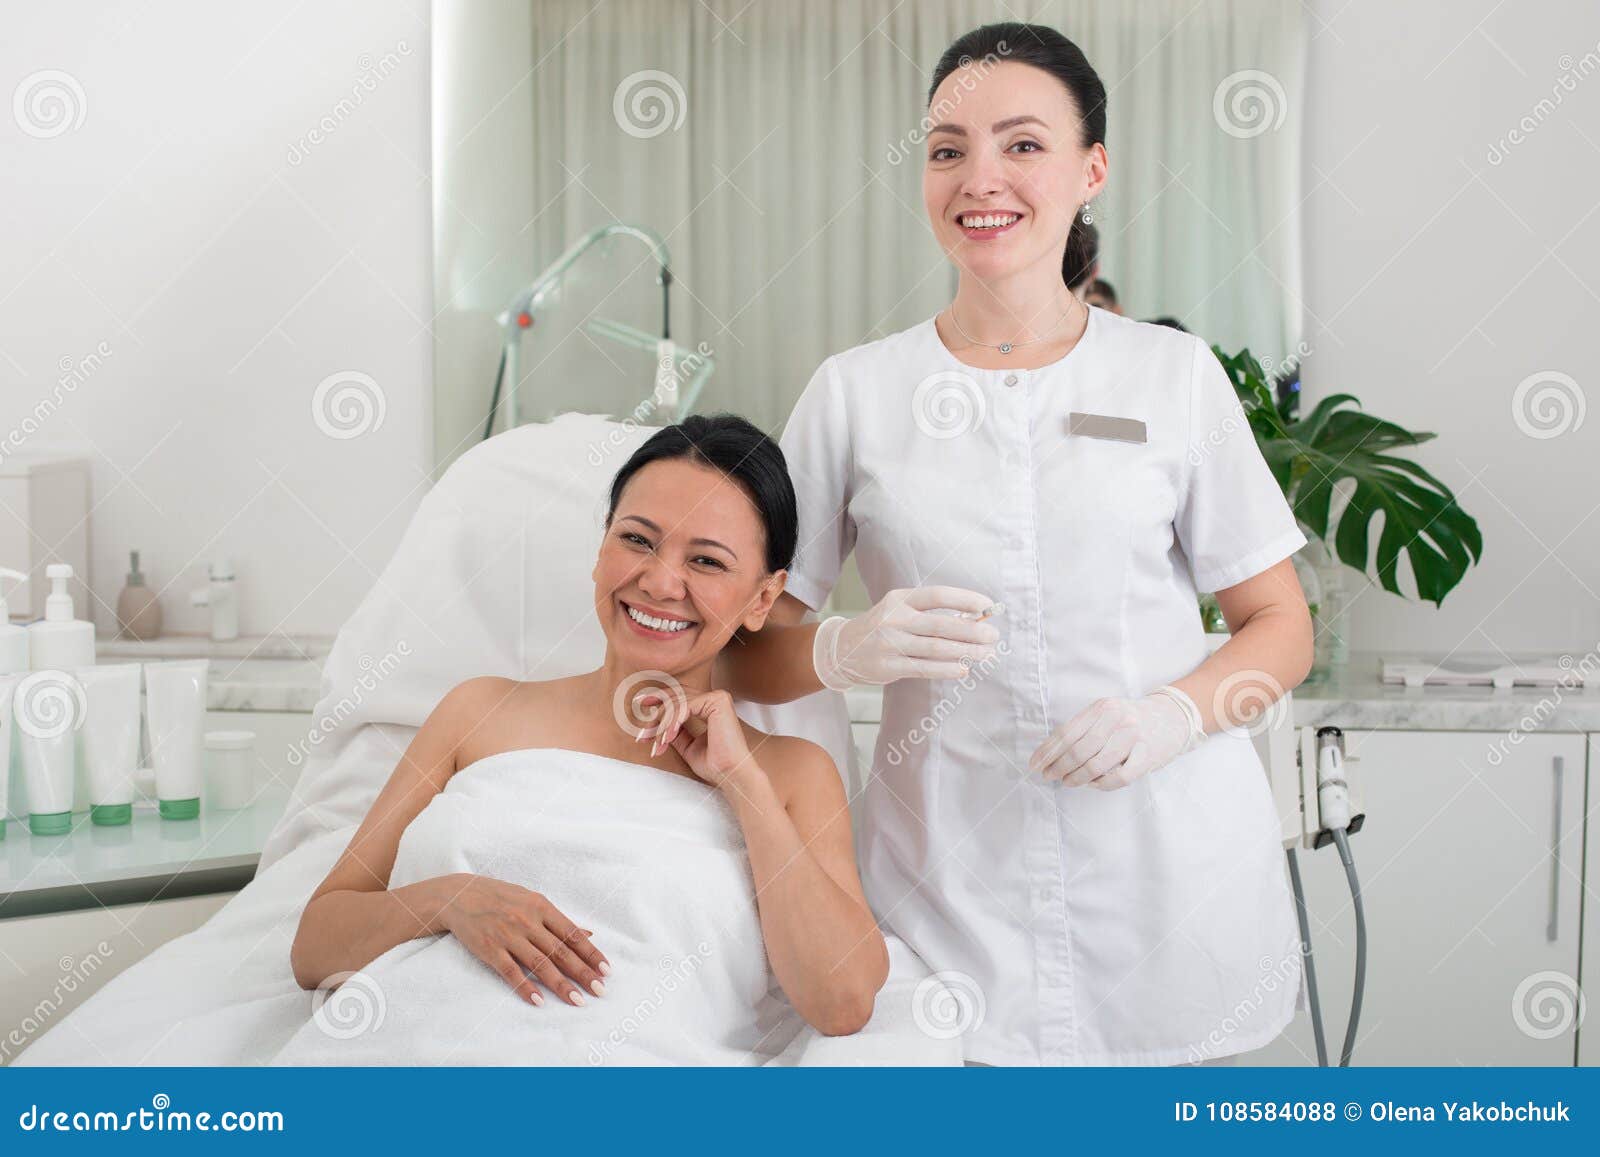 Glad Female Having Rest After Procedure In Beauty Salon Stock